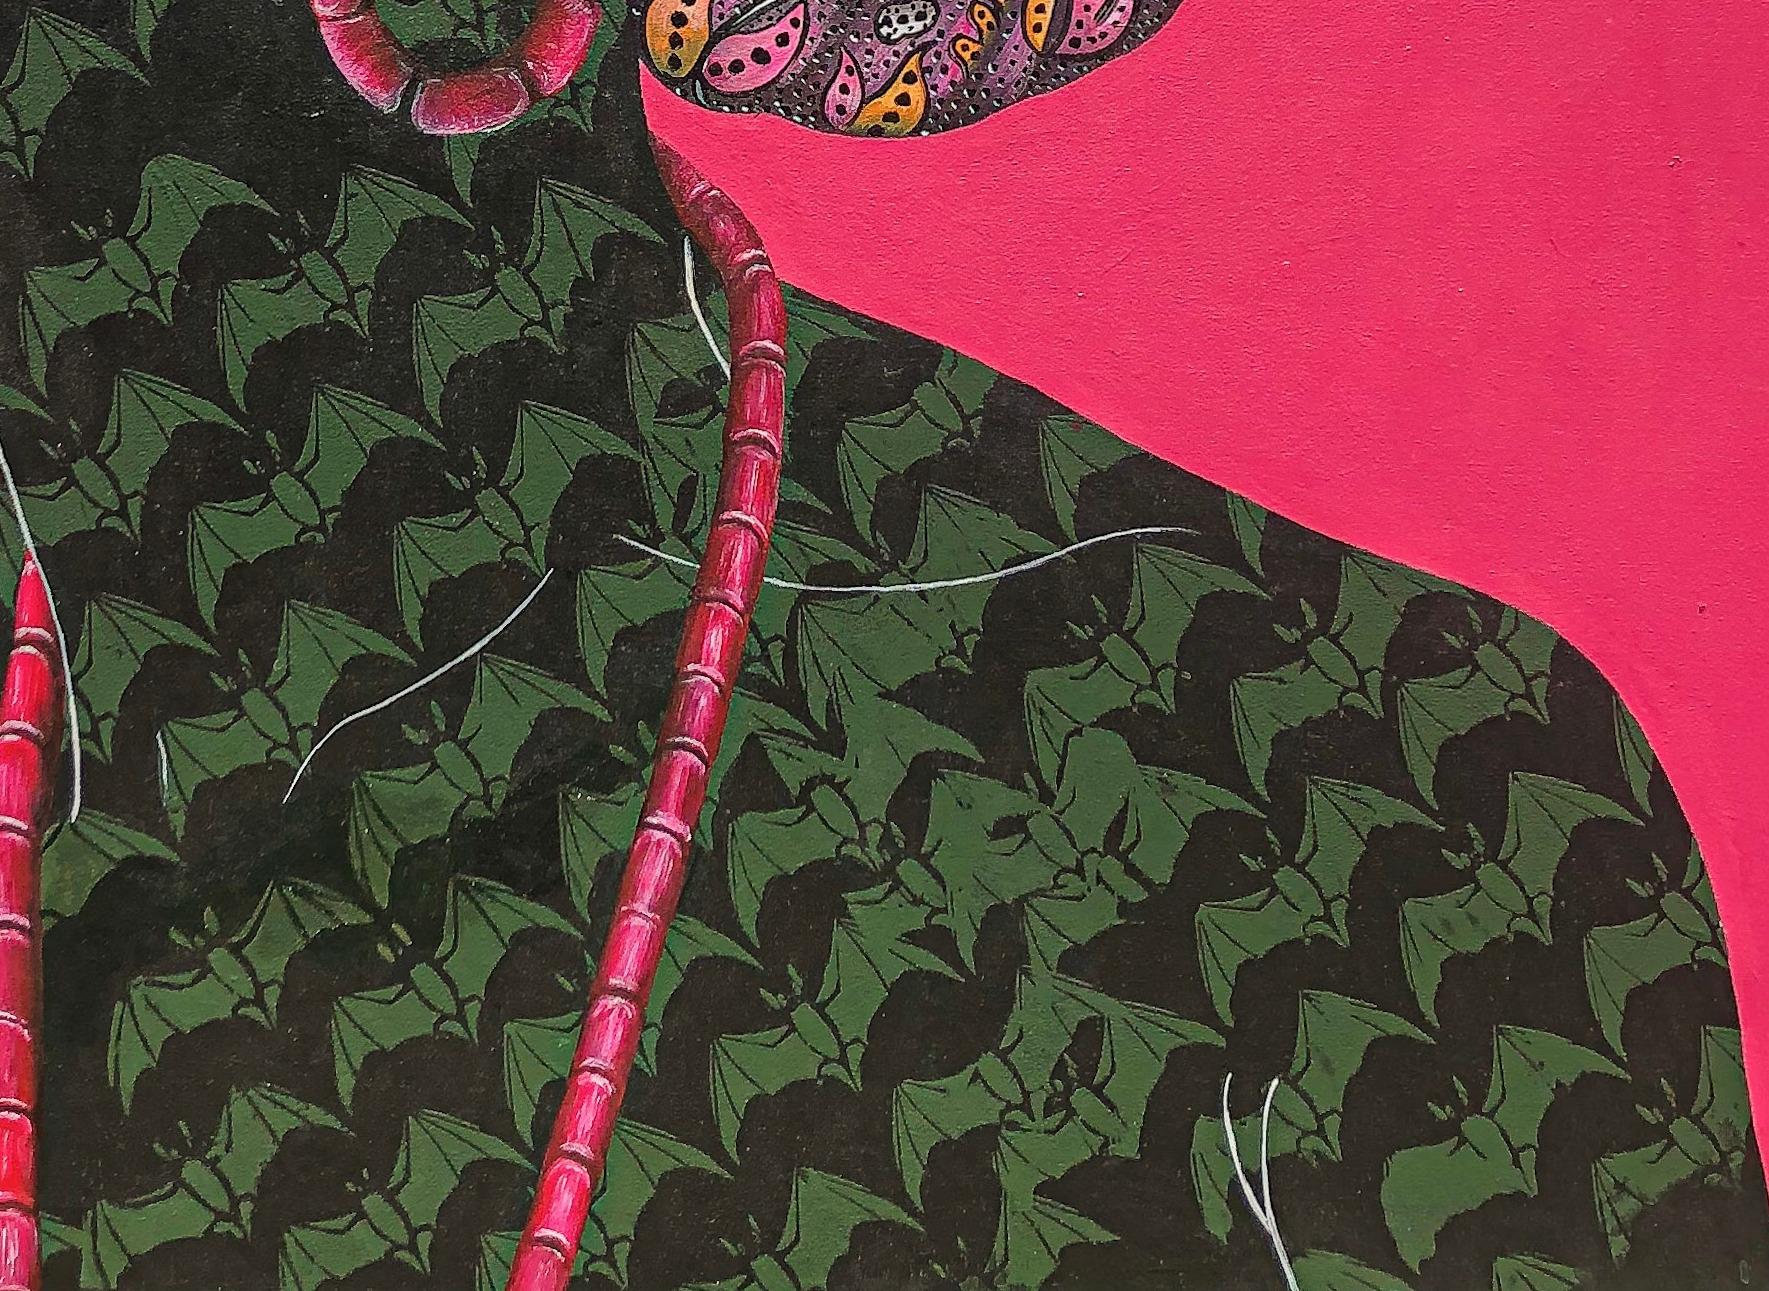 GÈLÈ 3 (Head Tie) - Pink Abstract Painting by Oluwafemi Afolabi